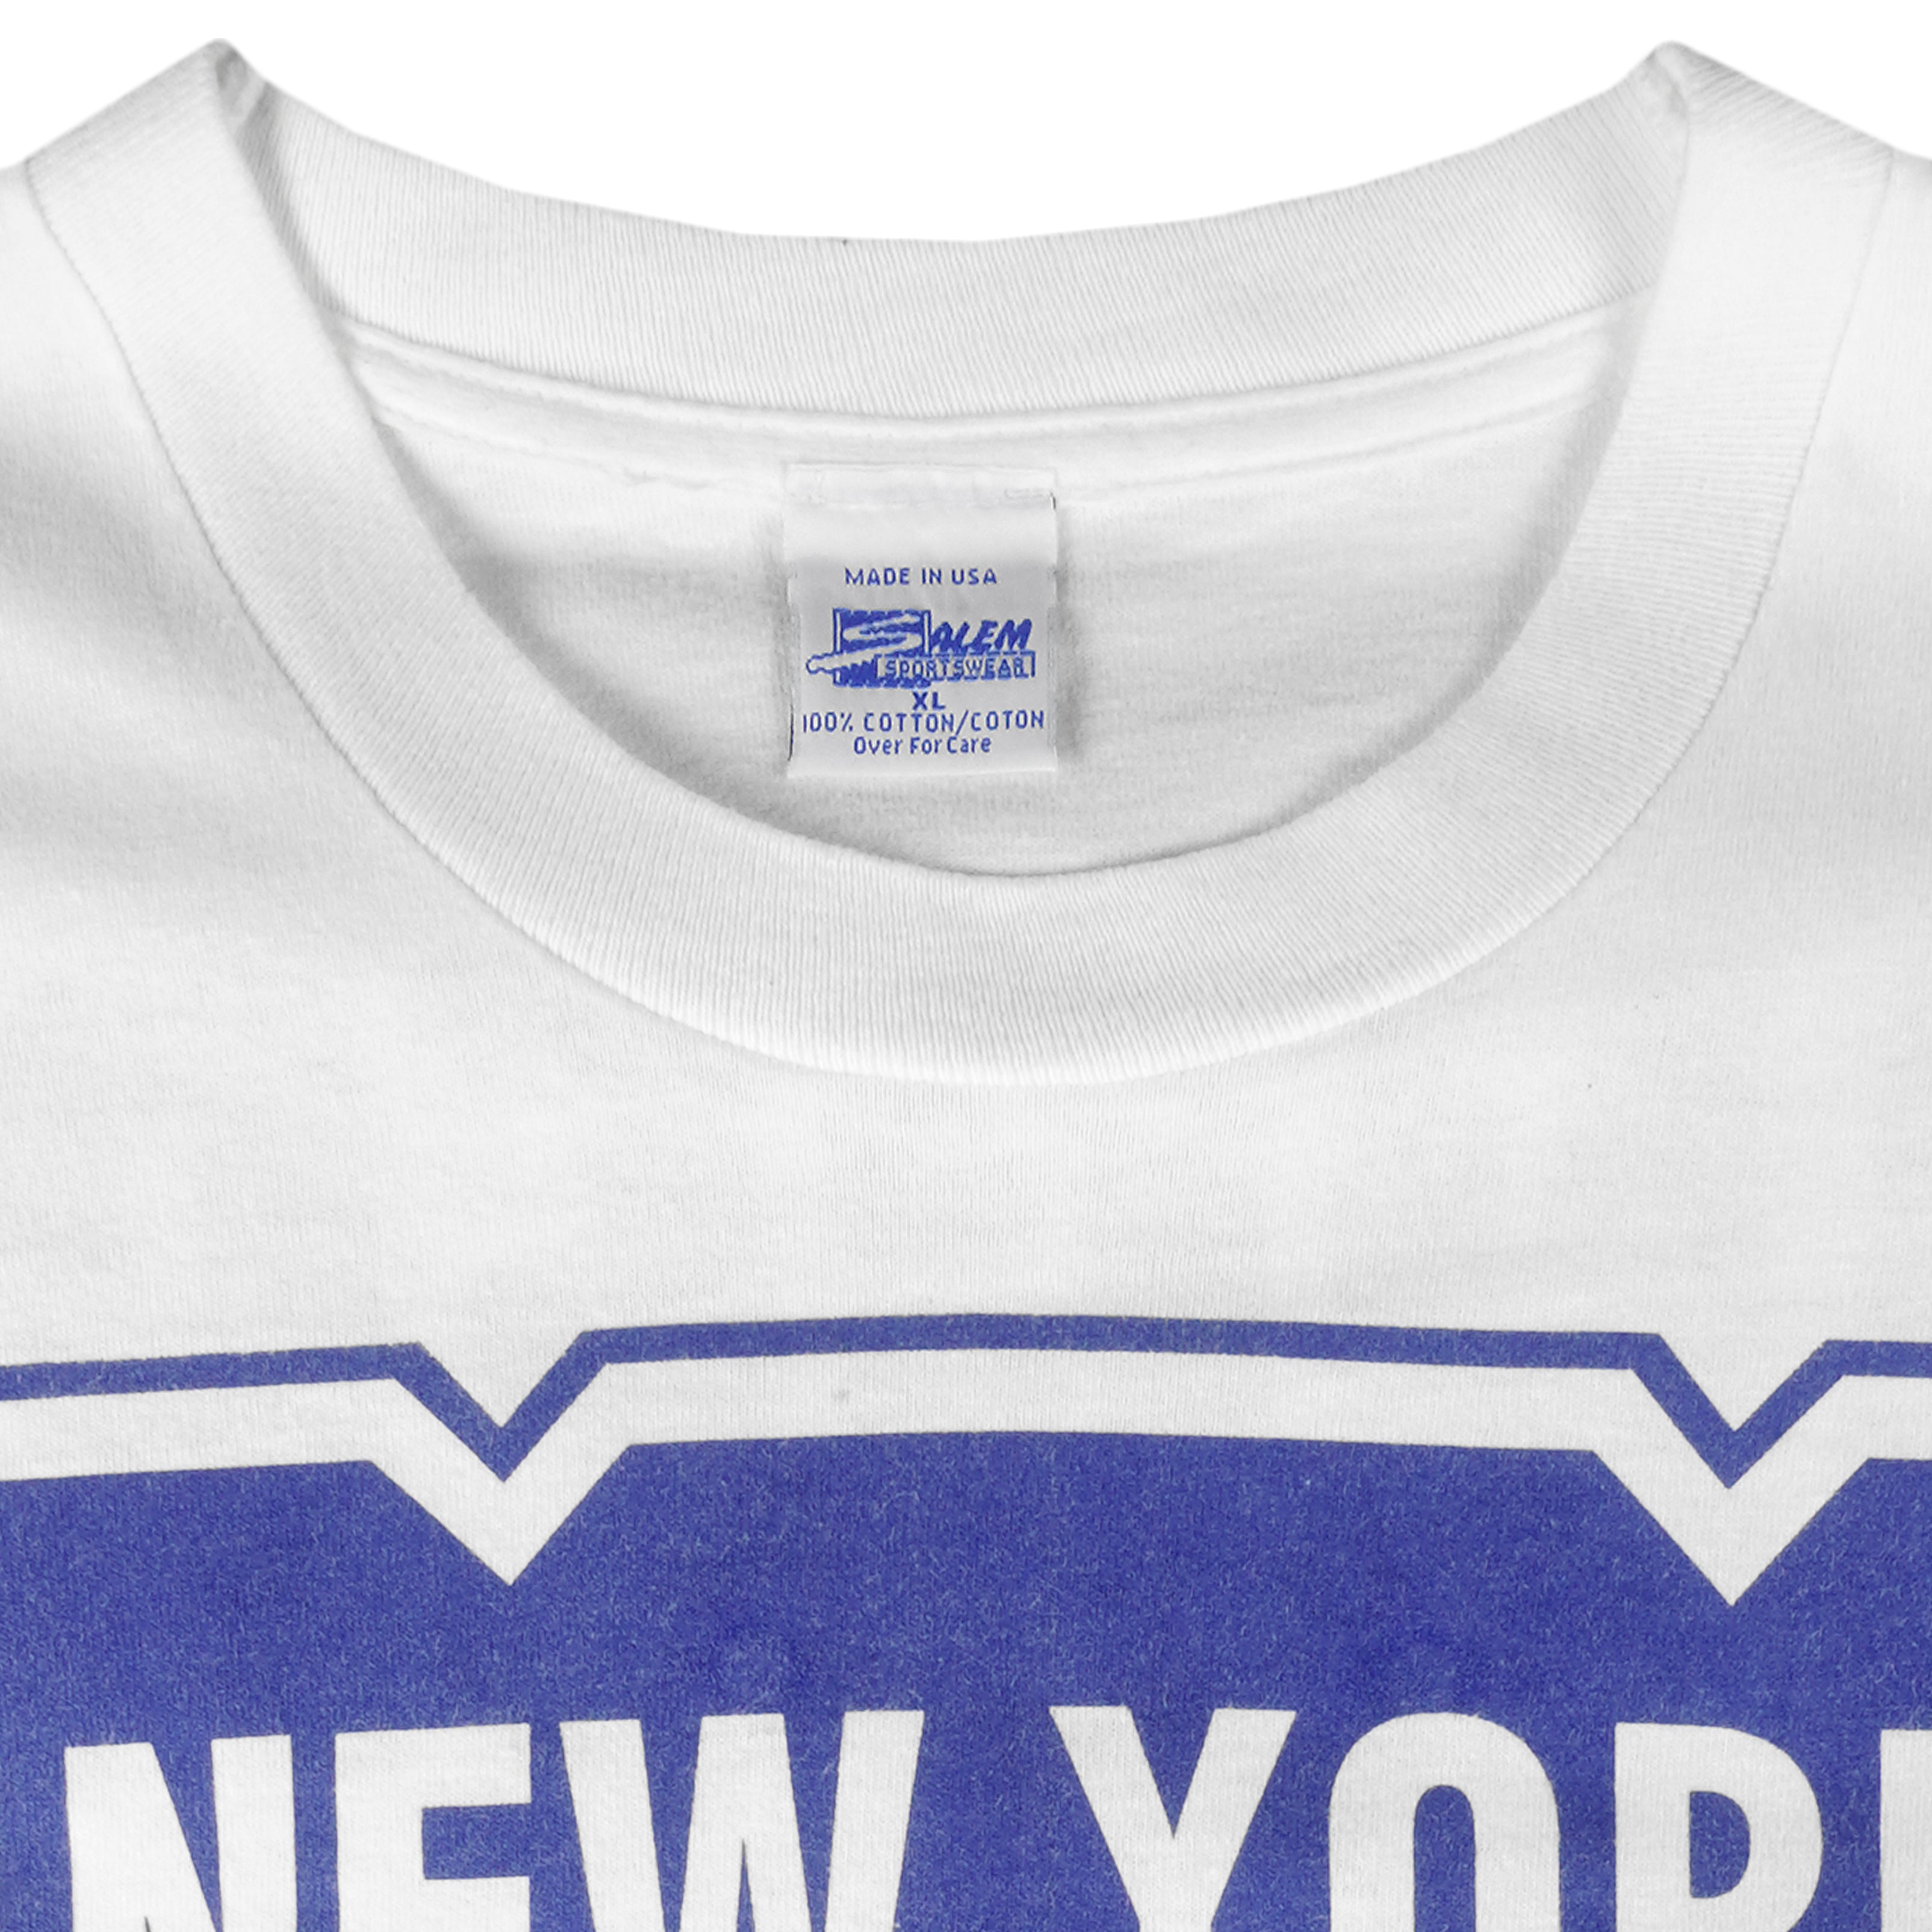 Vintage 1994 New York Yankees MLB T-Shirt Size Large